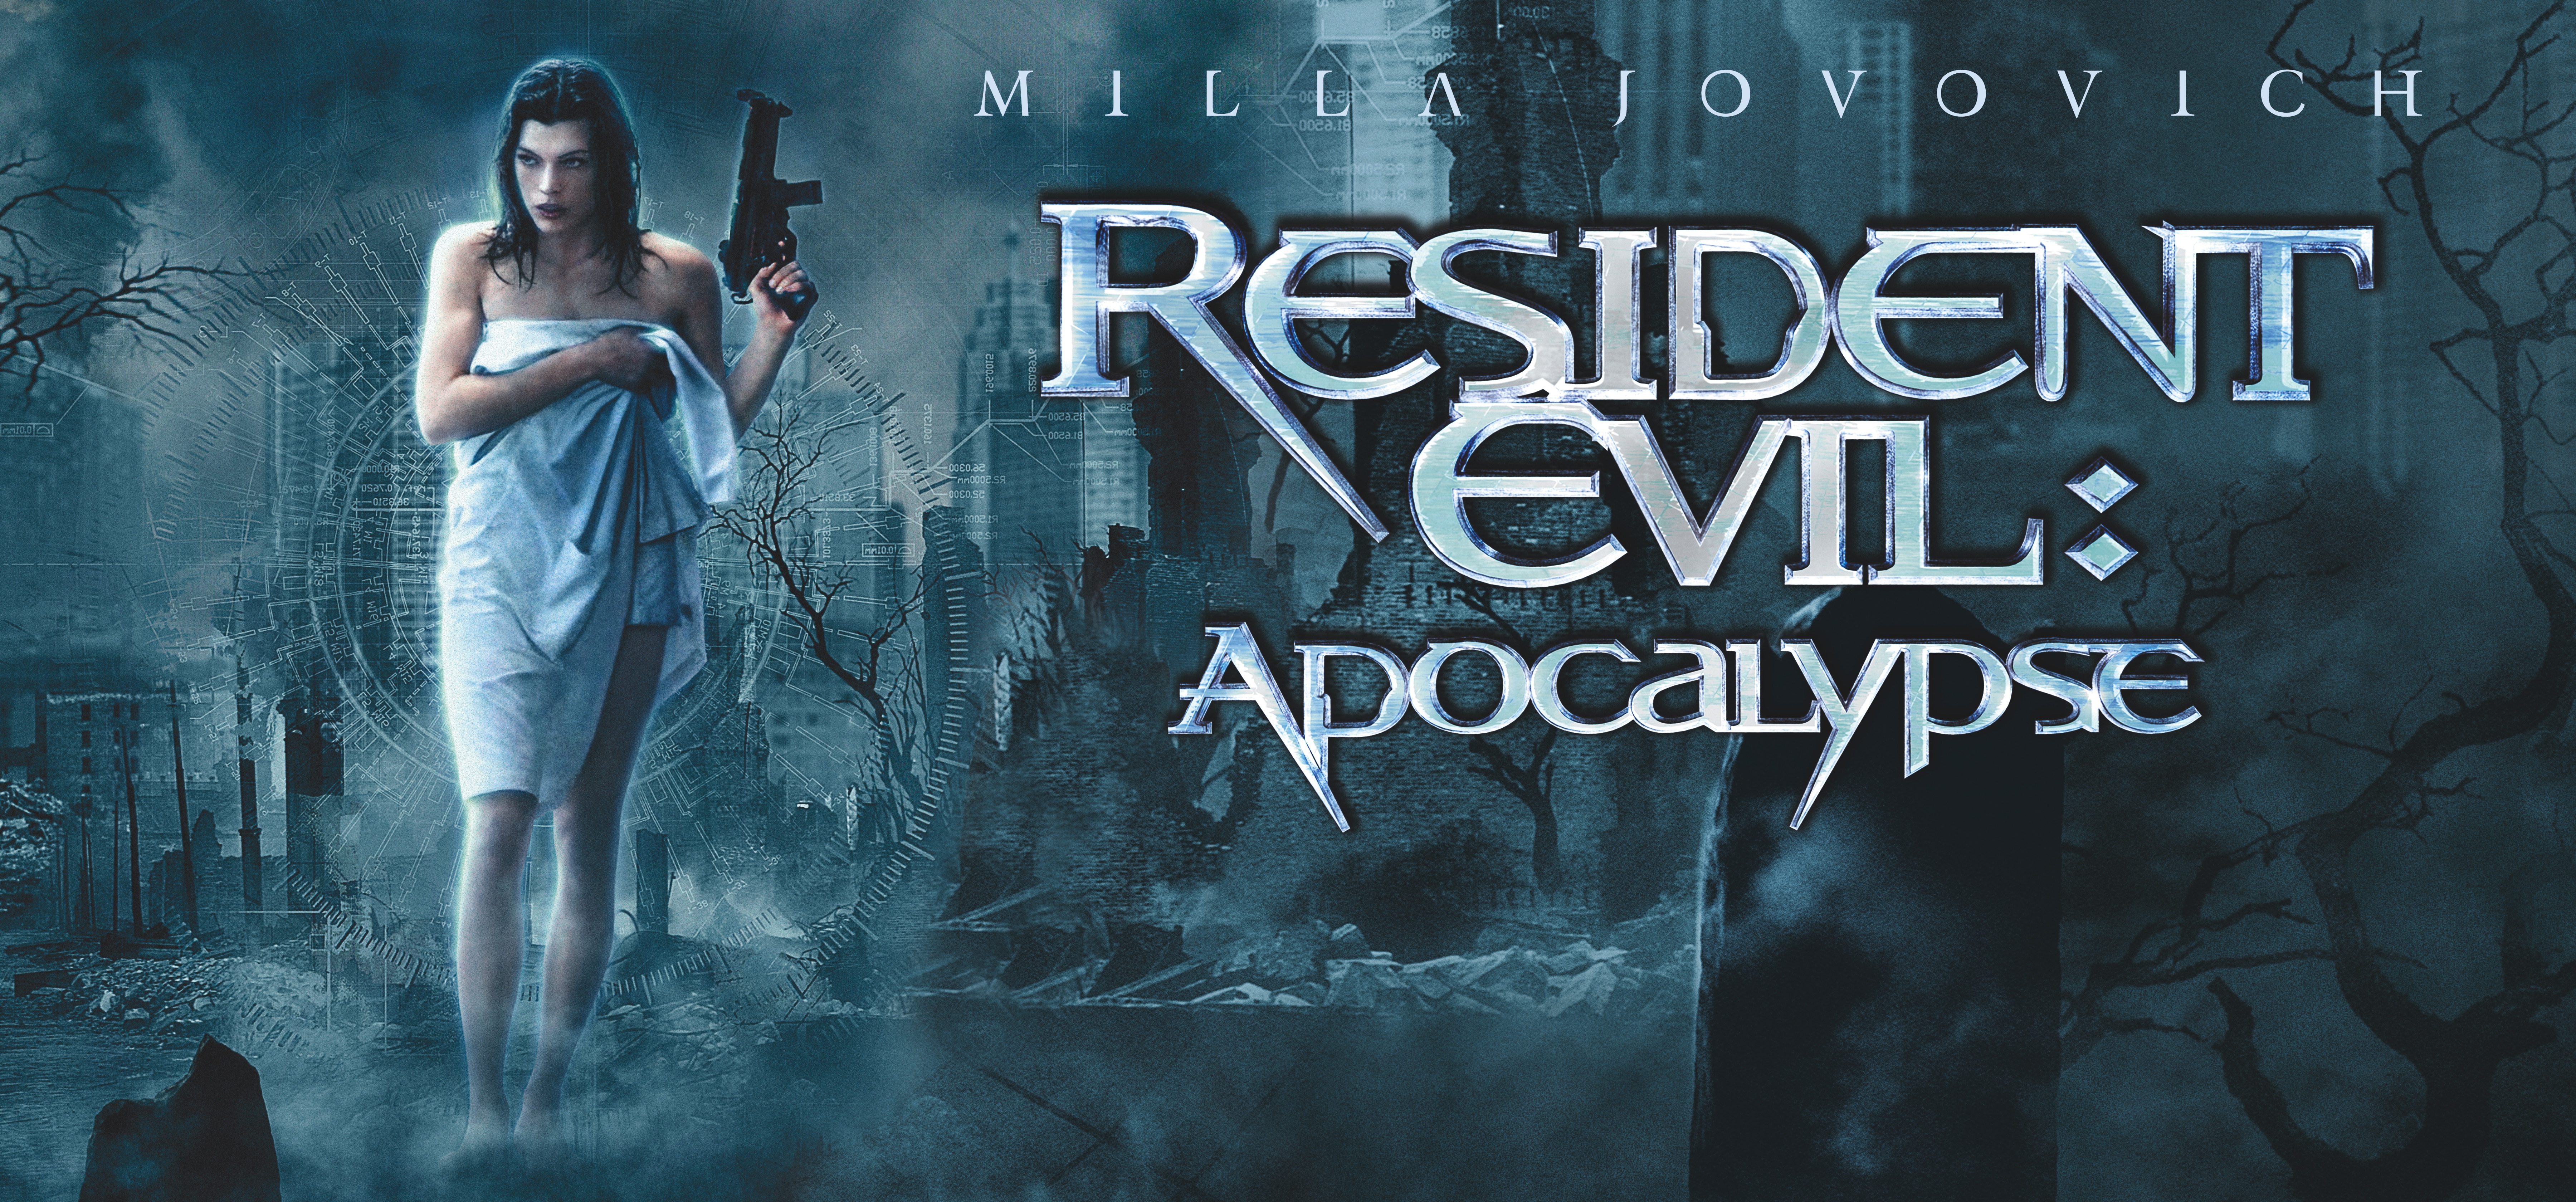 Resident Evil: Apocalypse Wallpapers